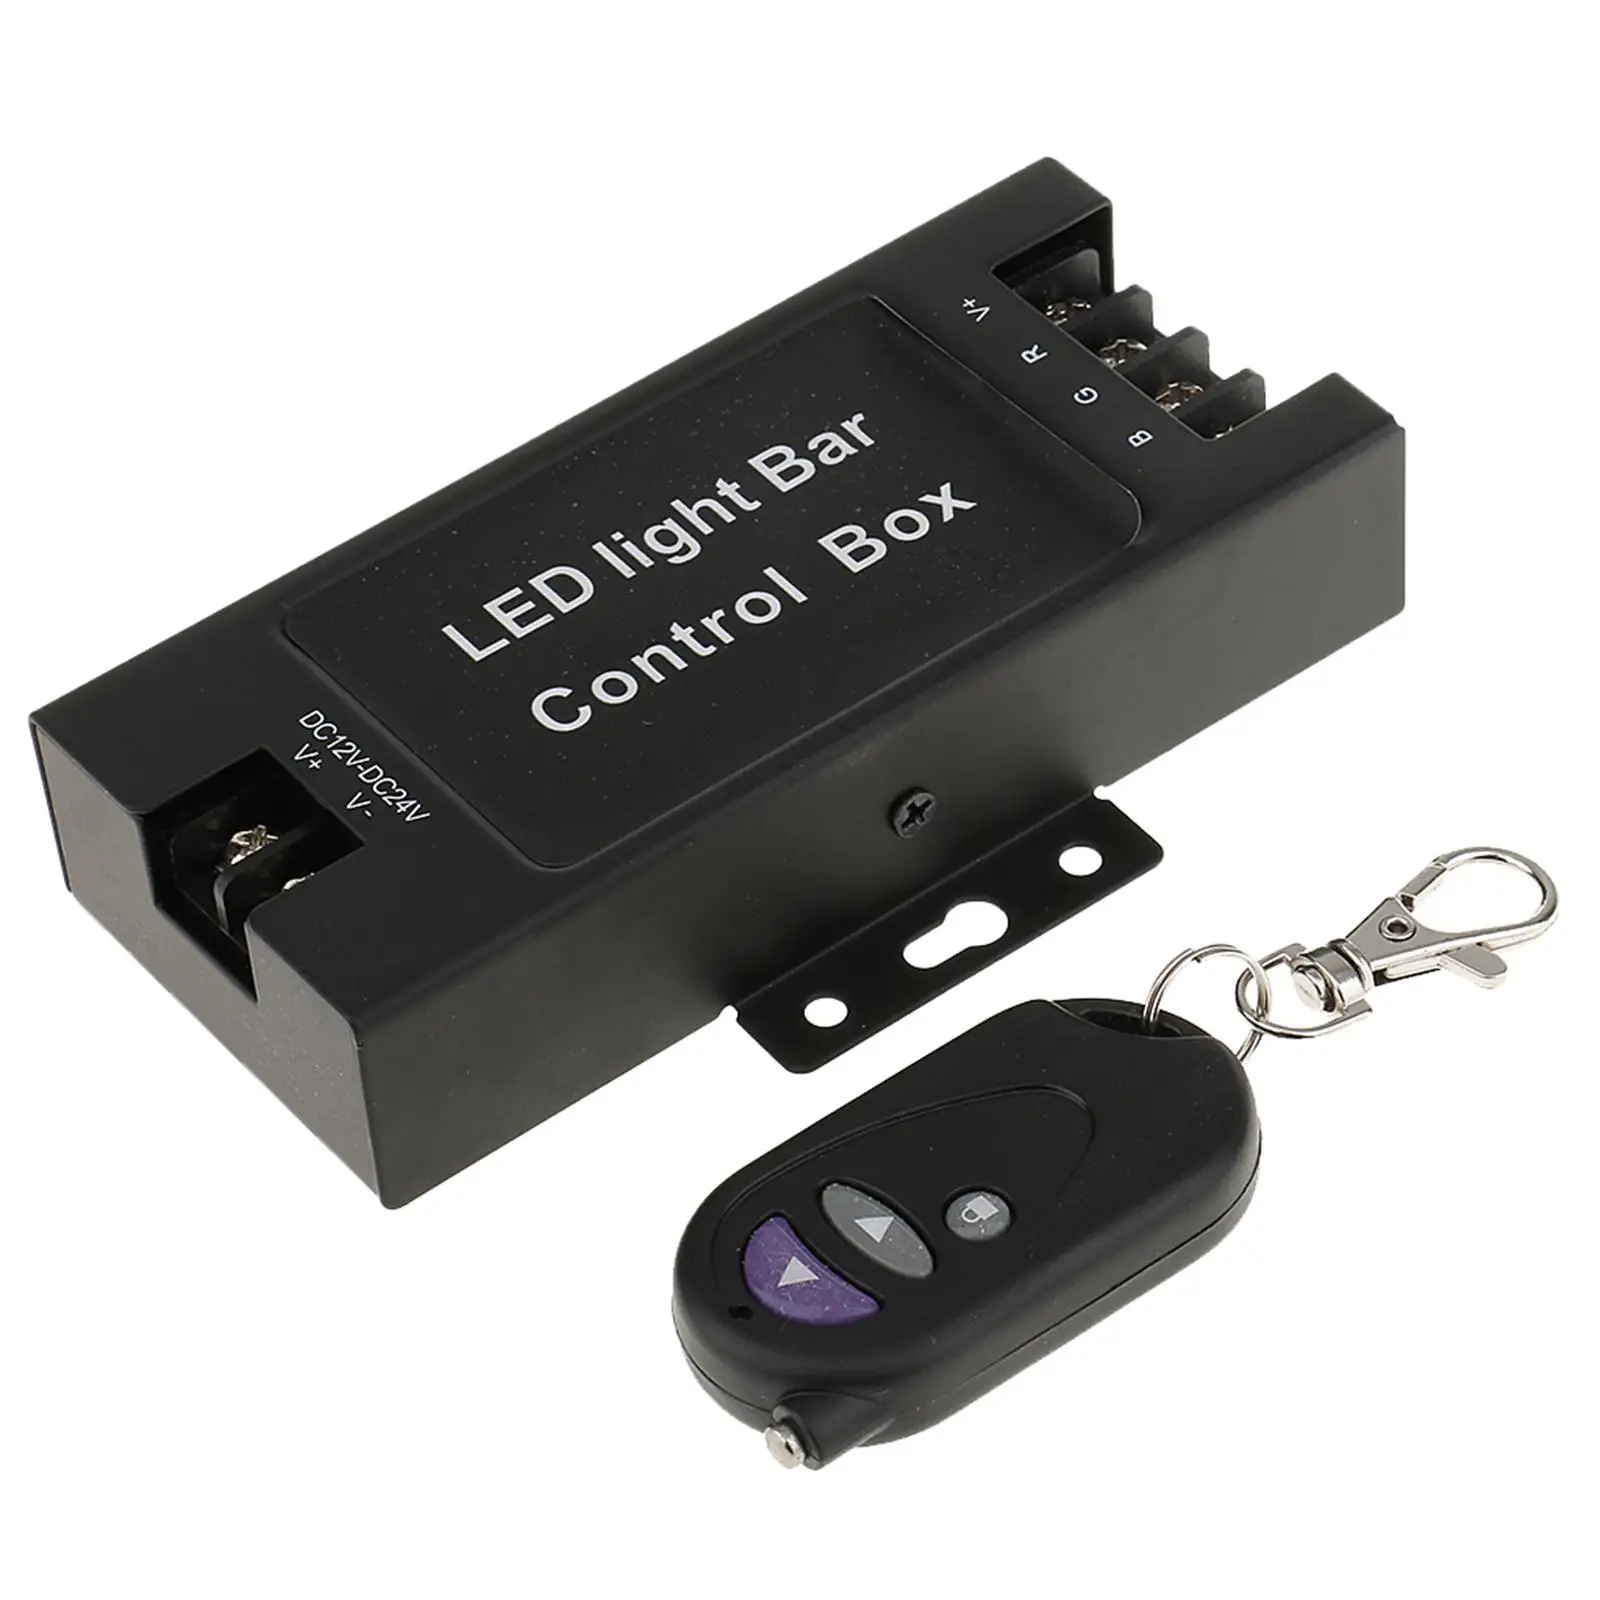 12V -24 Light Lamp Bar Strobe Controller Box with  Remote Black New